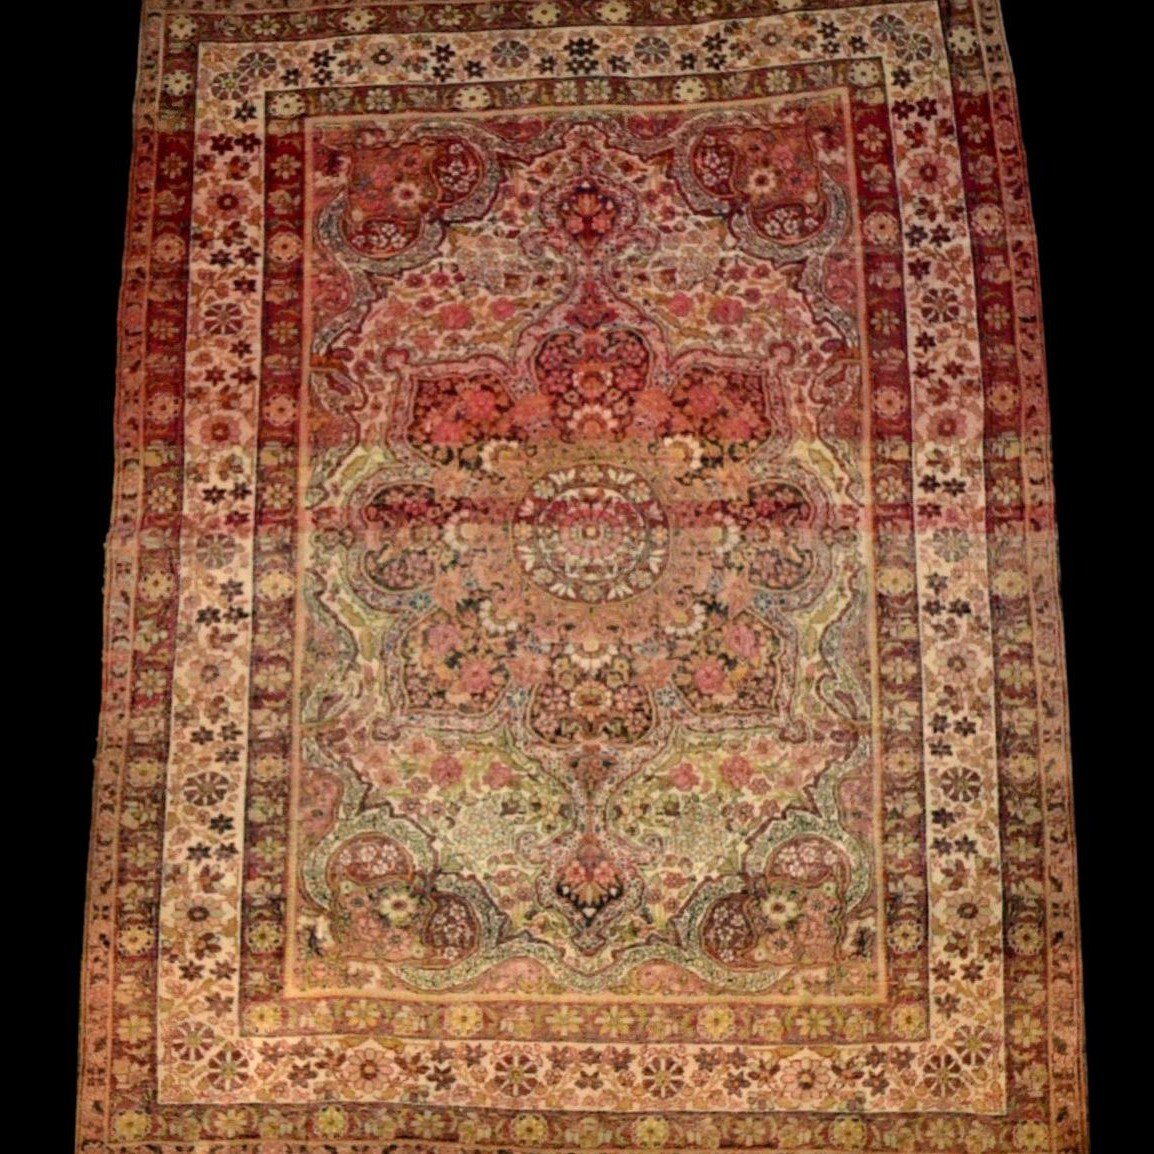 Tapis Kirman ancien,136 x 179 cm, laine nouée main vers 1880 en Perse, Iran, dynastie Kadjar